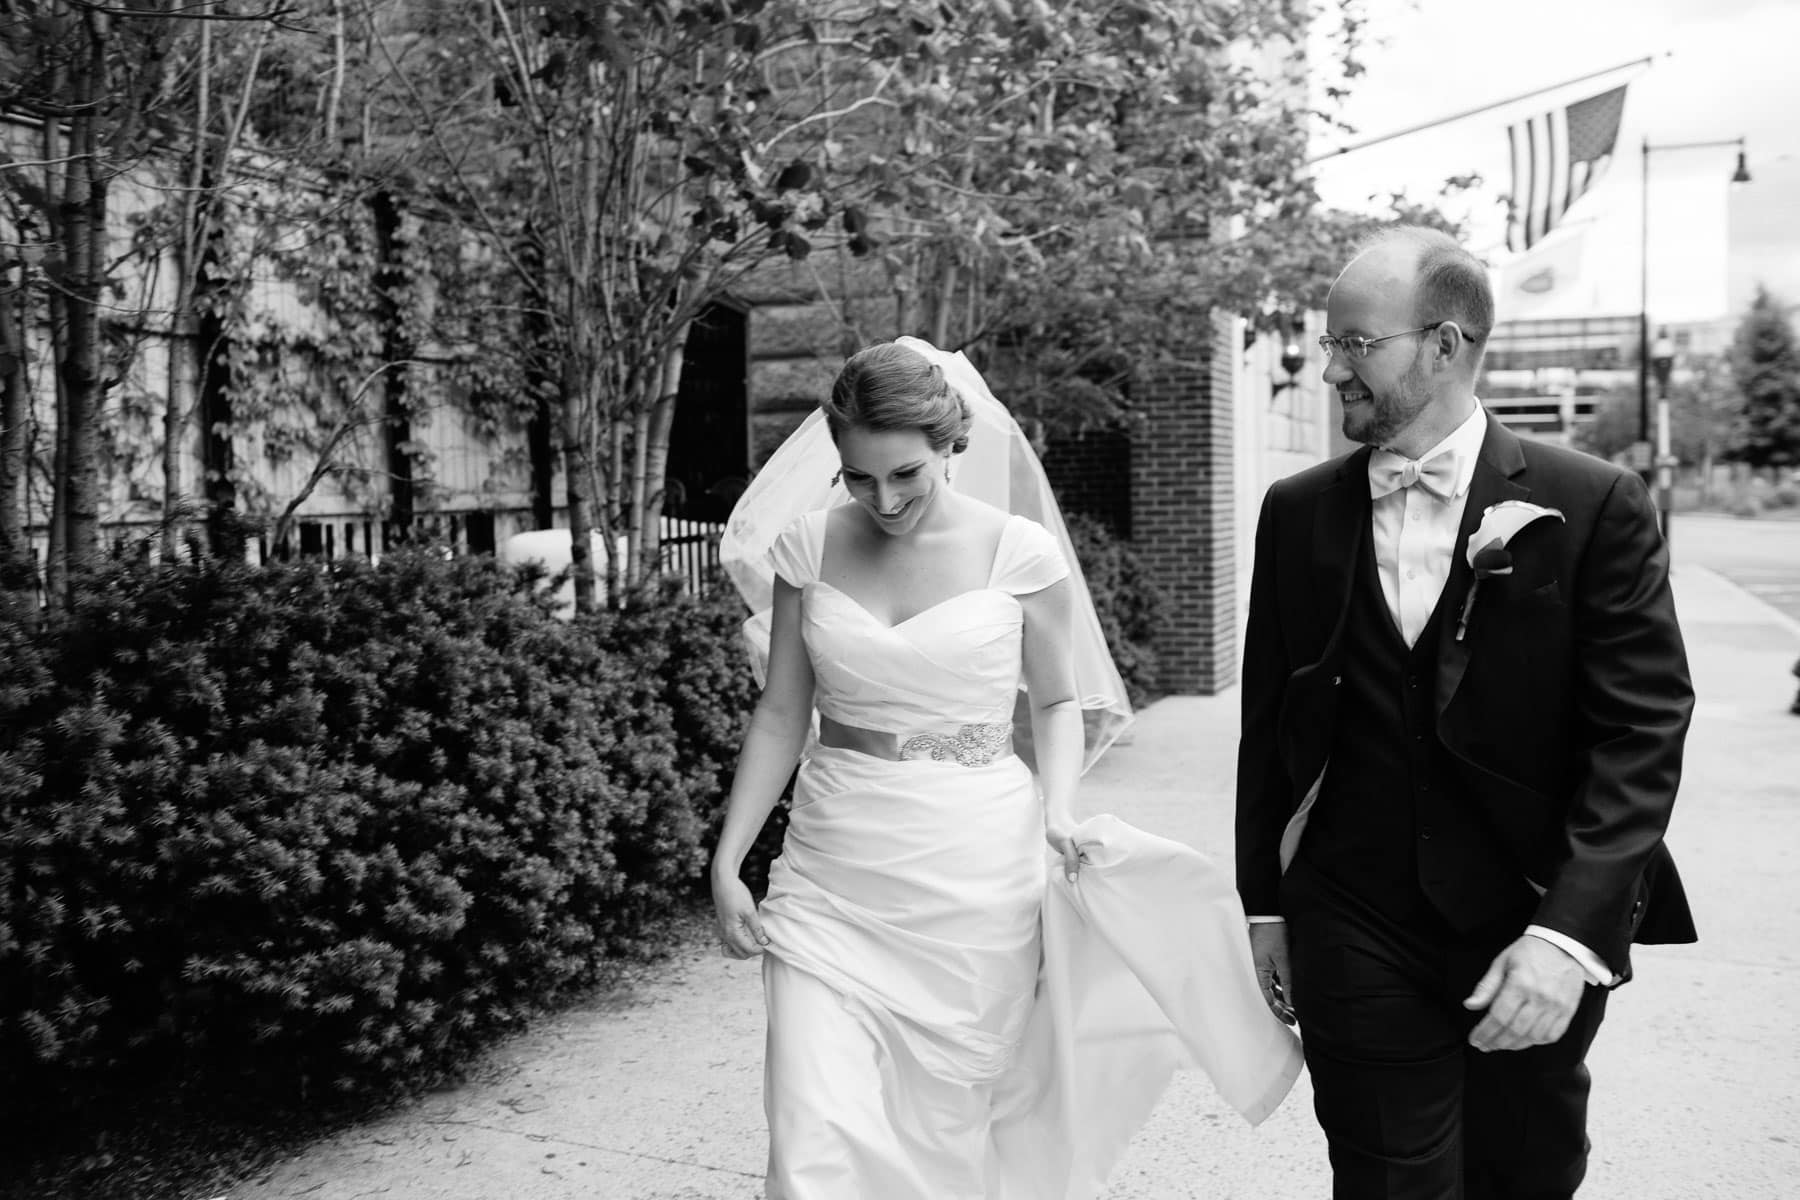 Liberty Hotel wedding of Laura and Tom in Boston, MA | Kelly Benvenuto Photography | Boston Wedding Photographer